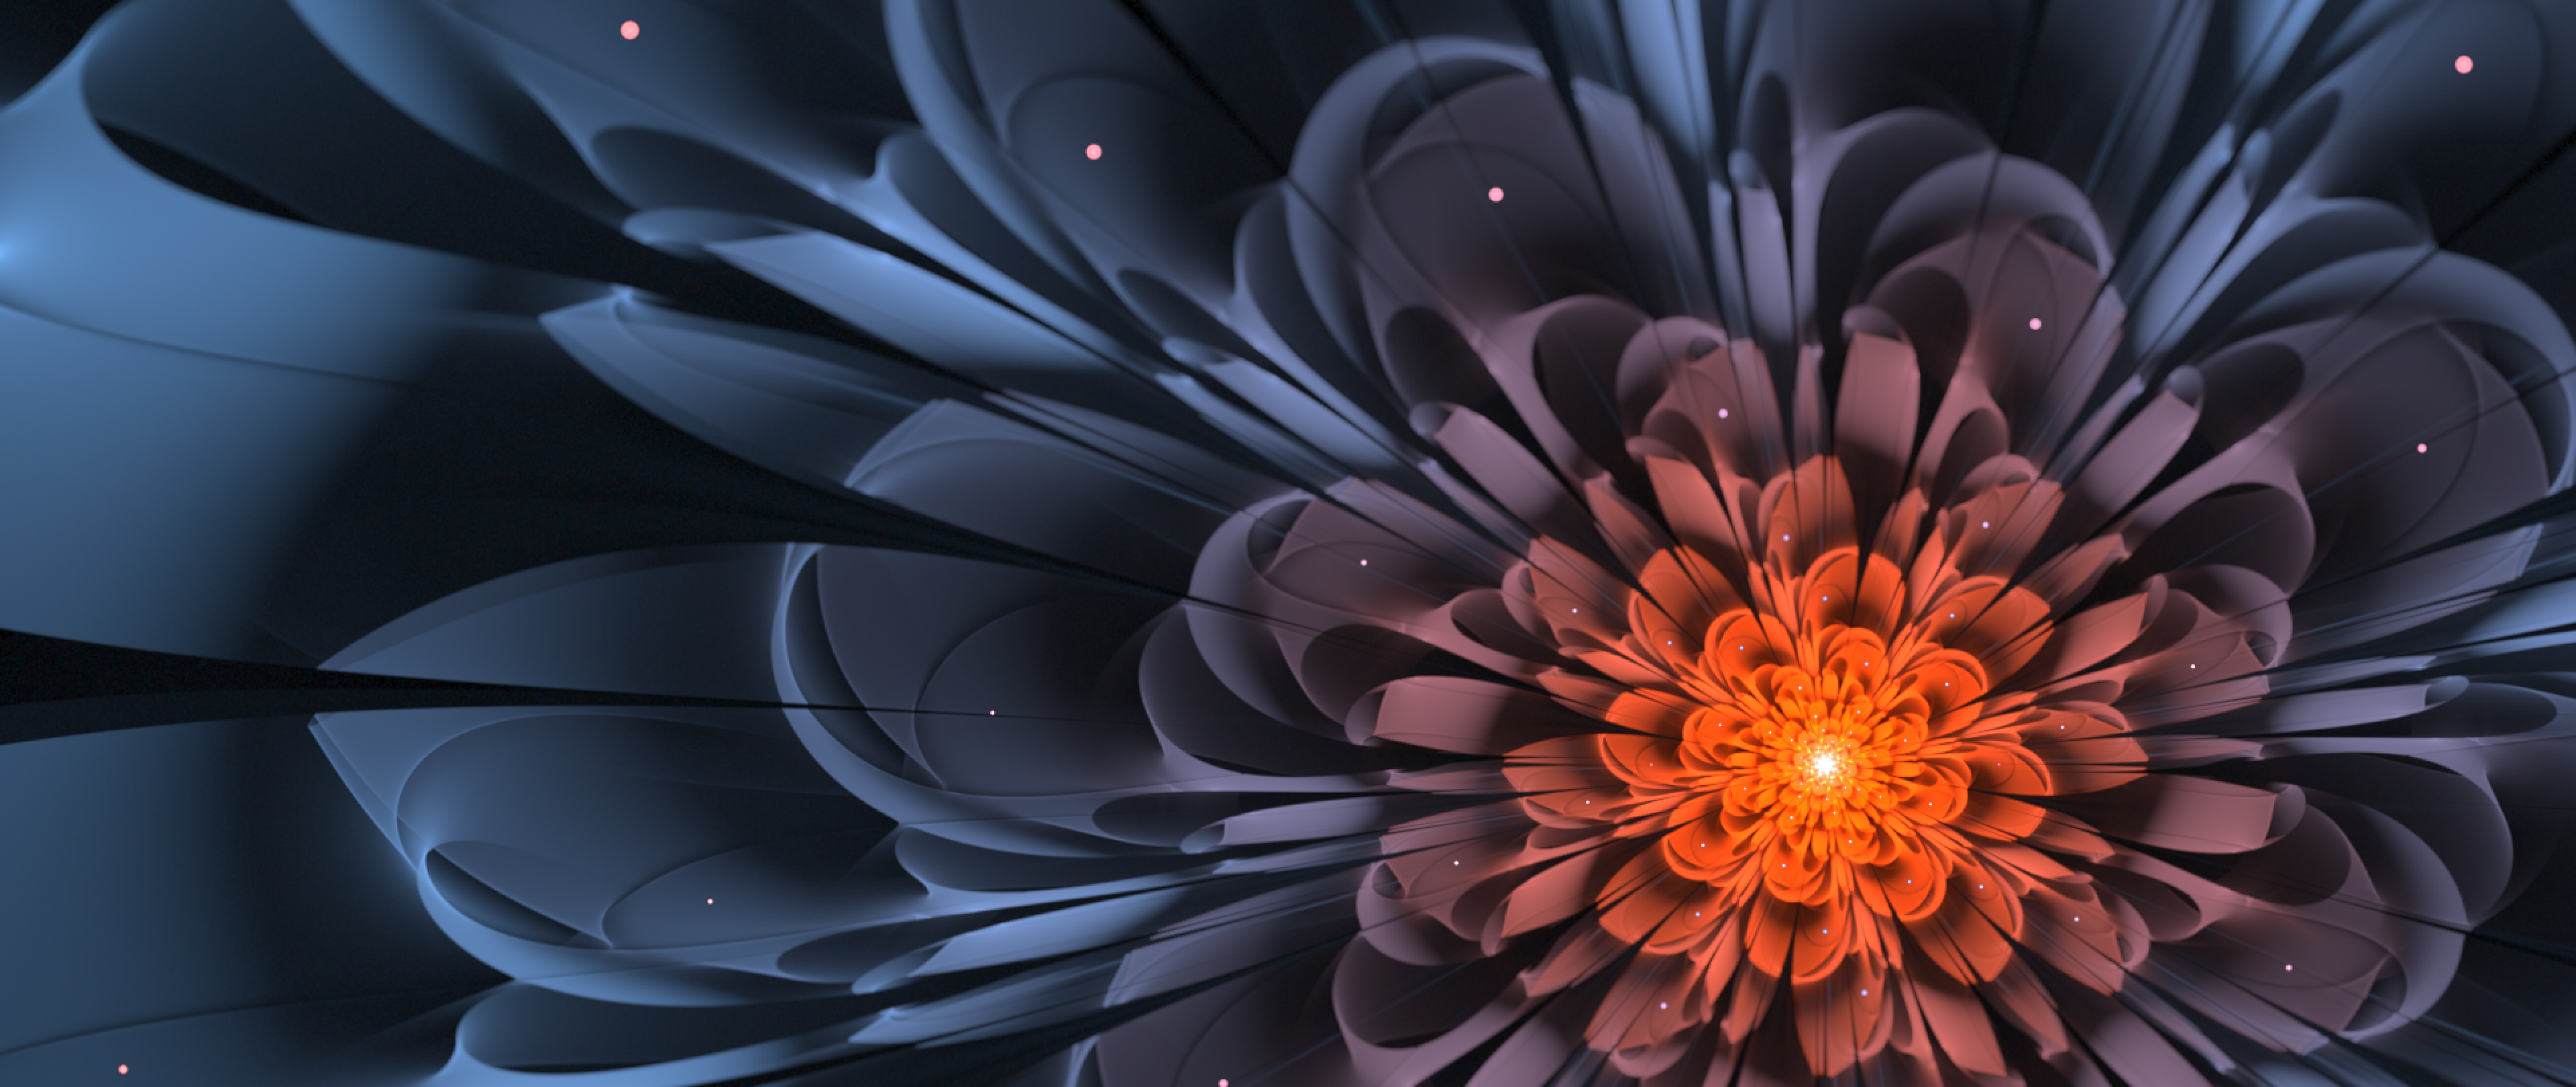 Fractal Flower Art Wallpaper for Desktop and Mobiles 4K Ultra HD Wide TV